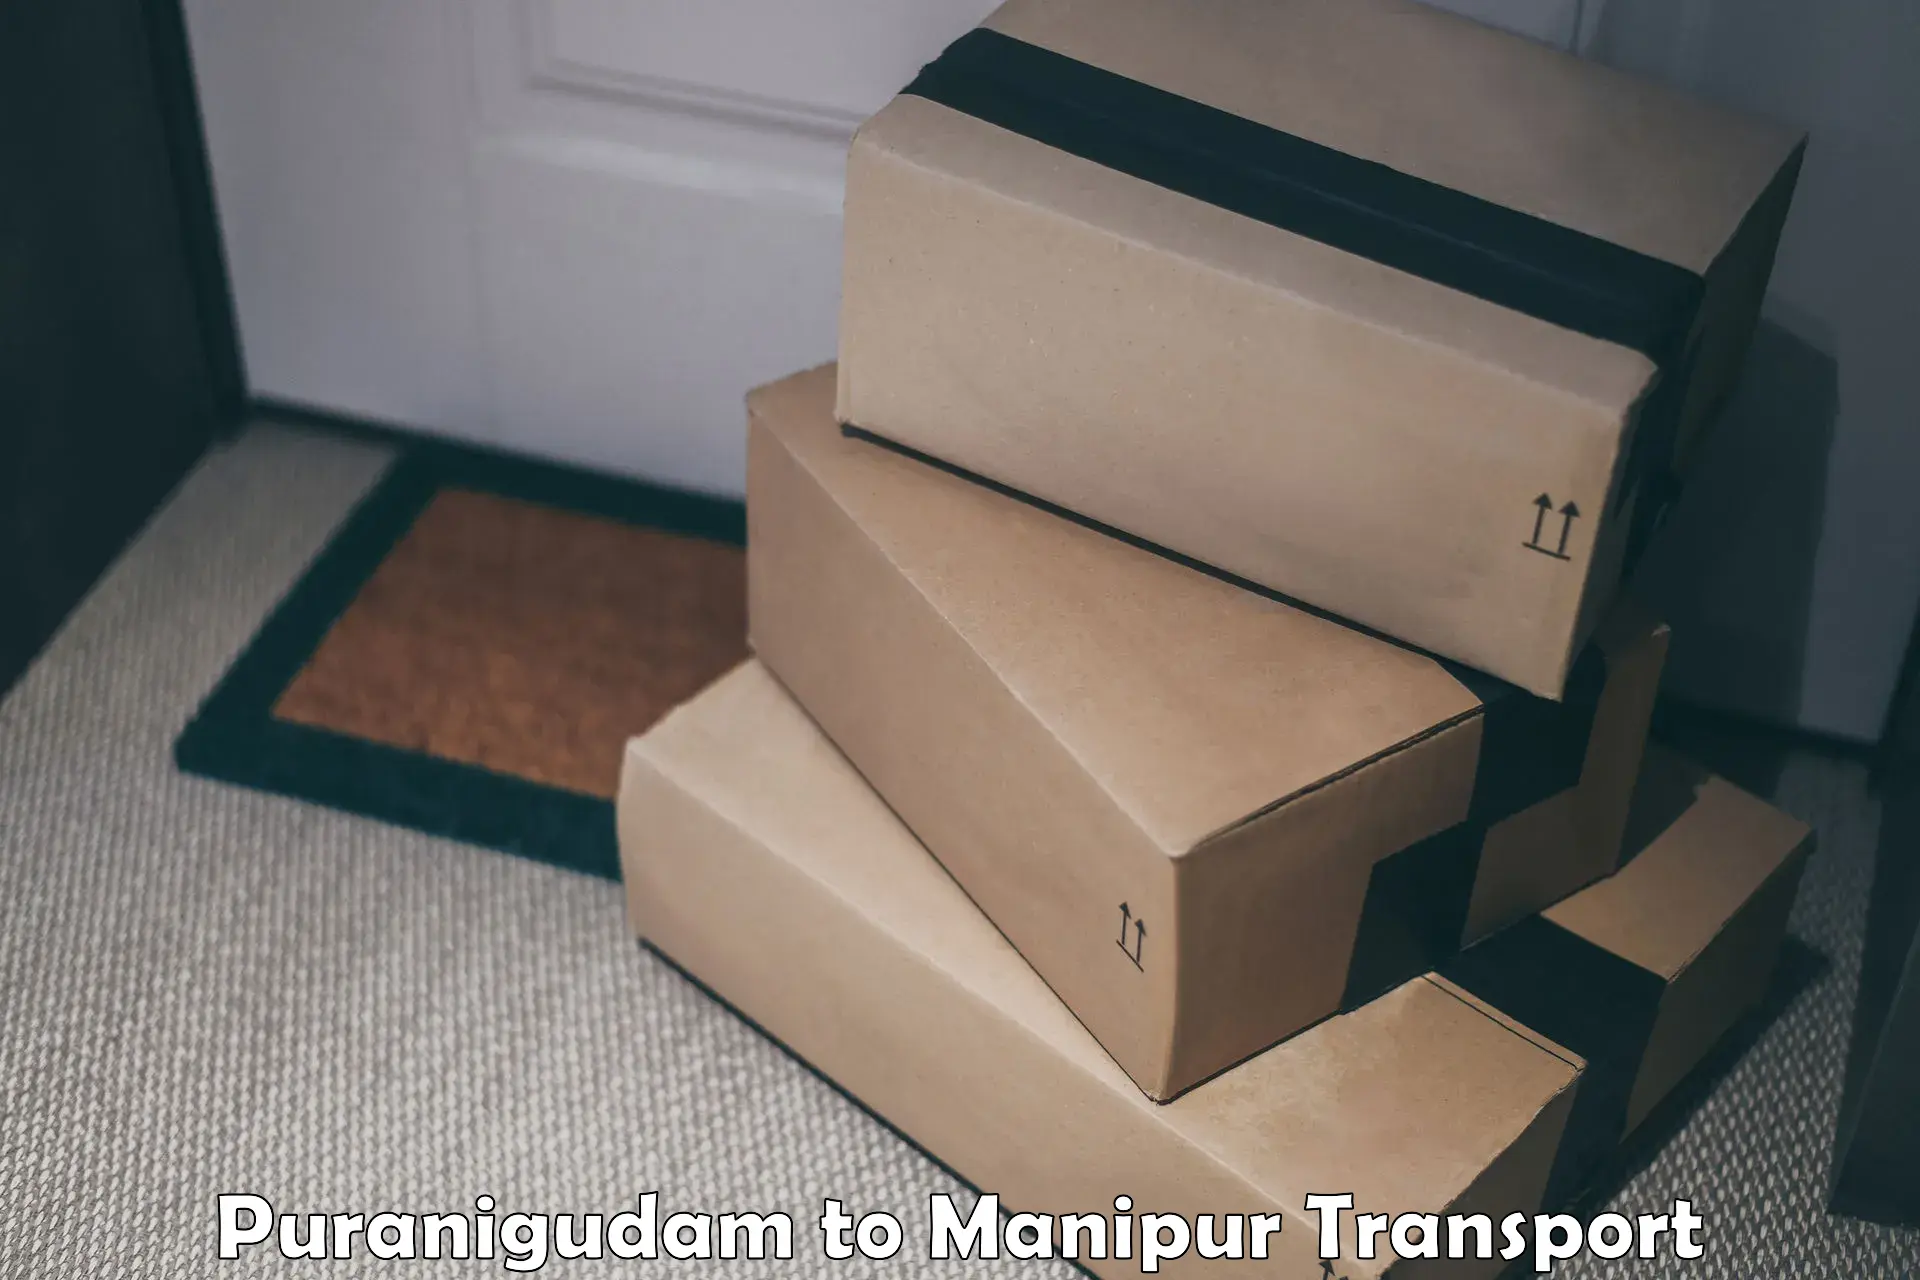 Shipping partner Puranigudam to Manipur